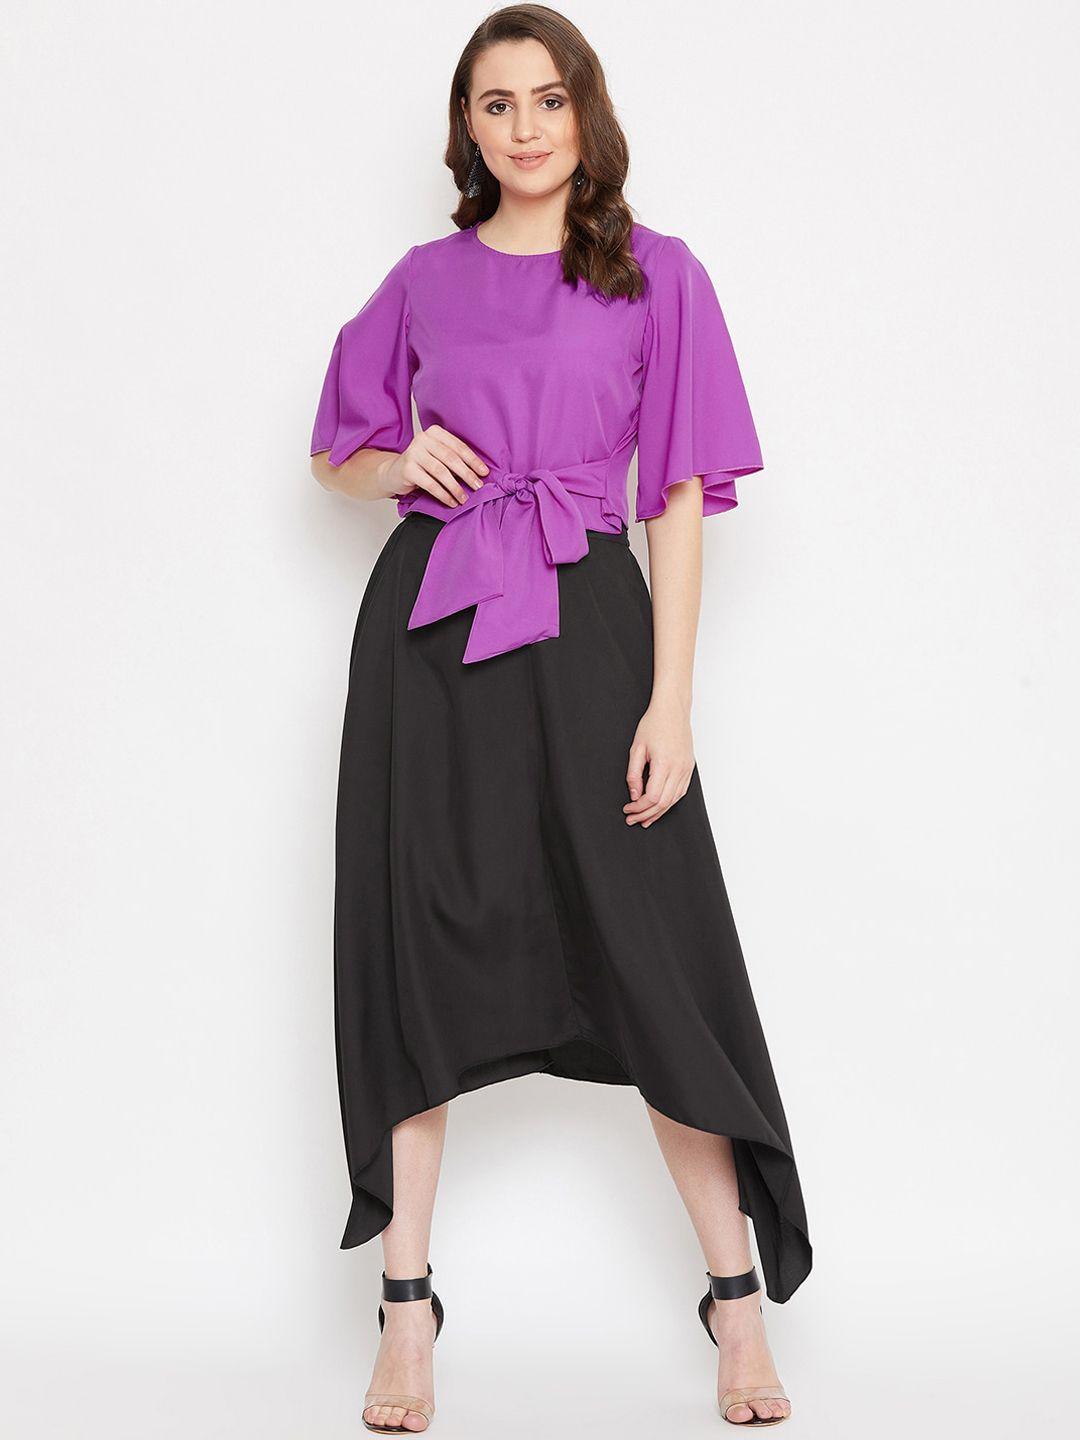 bitterlime women purple & black top with skirt